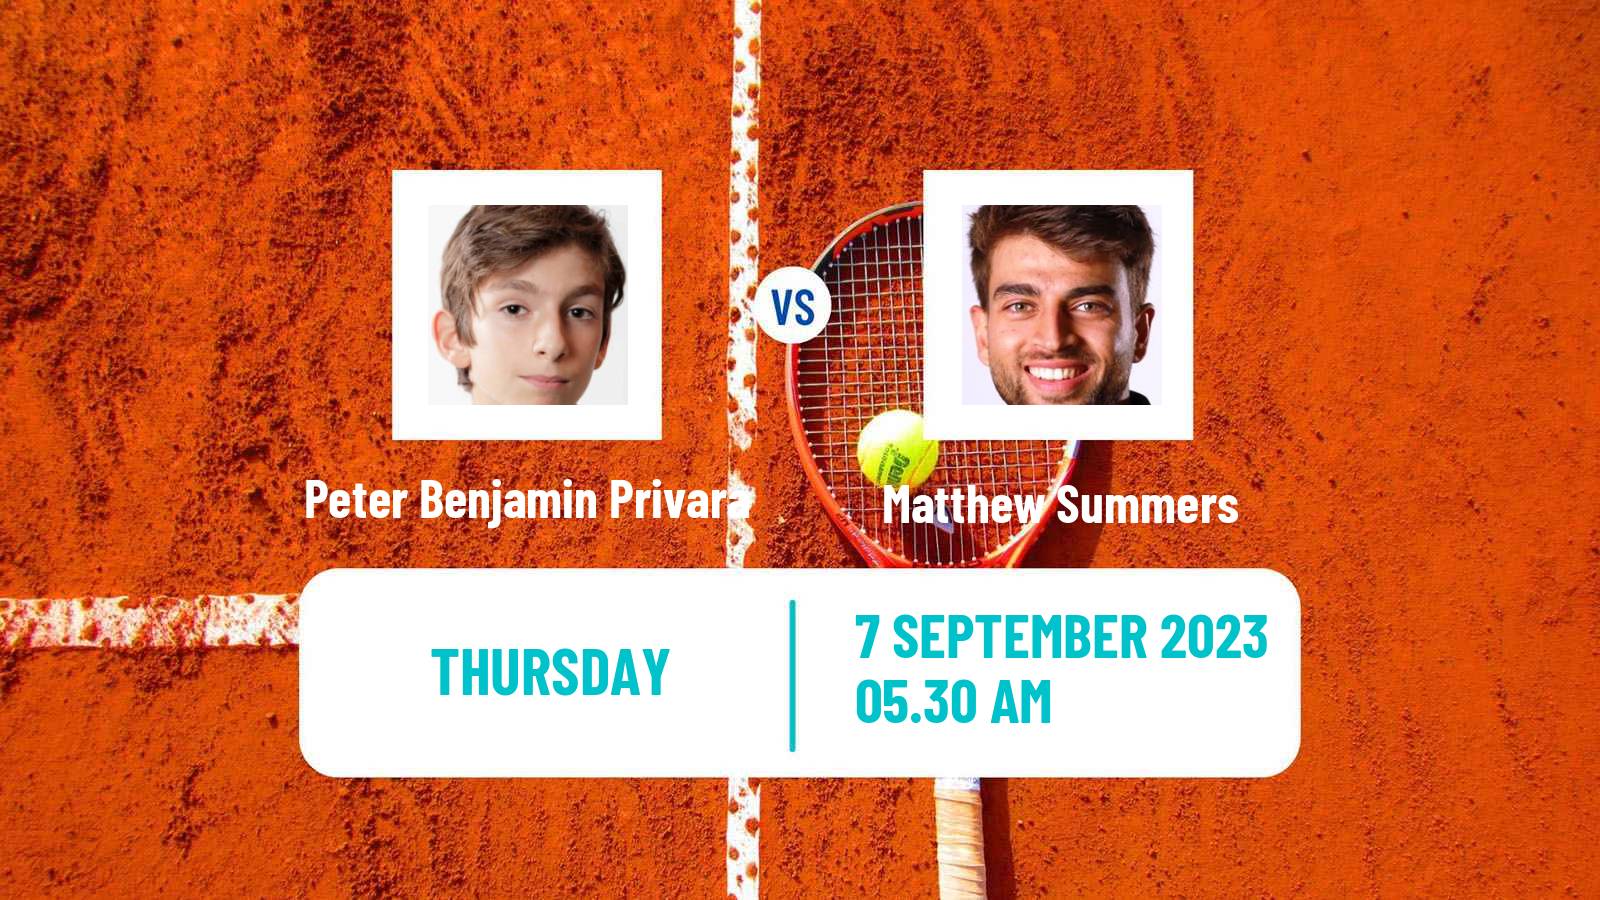 Tennis ITF M15 Budapest 2 Men Peter Benjamin Privara - Matthew Summers